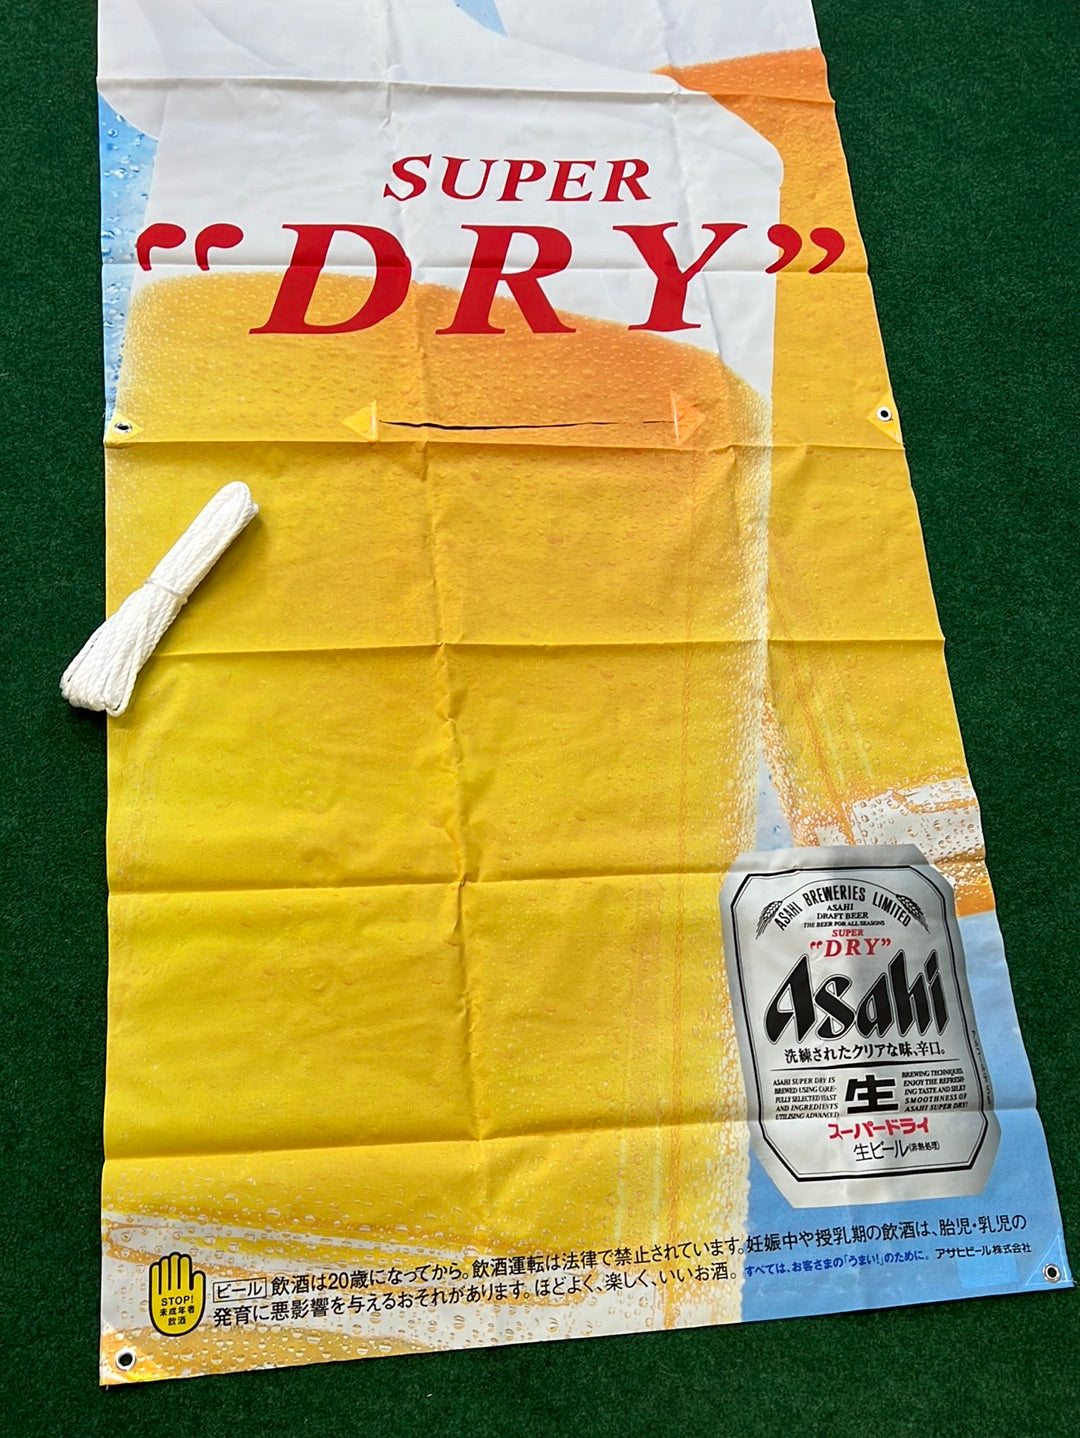 Asahi Beer - “Super Dry” Large Advertising Banner